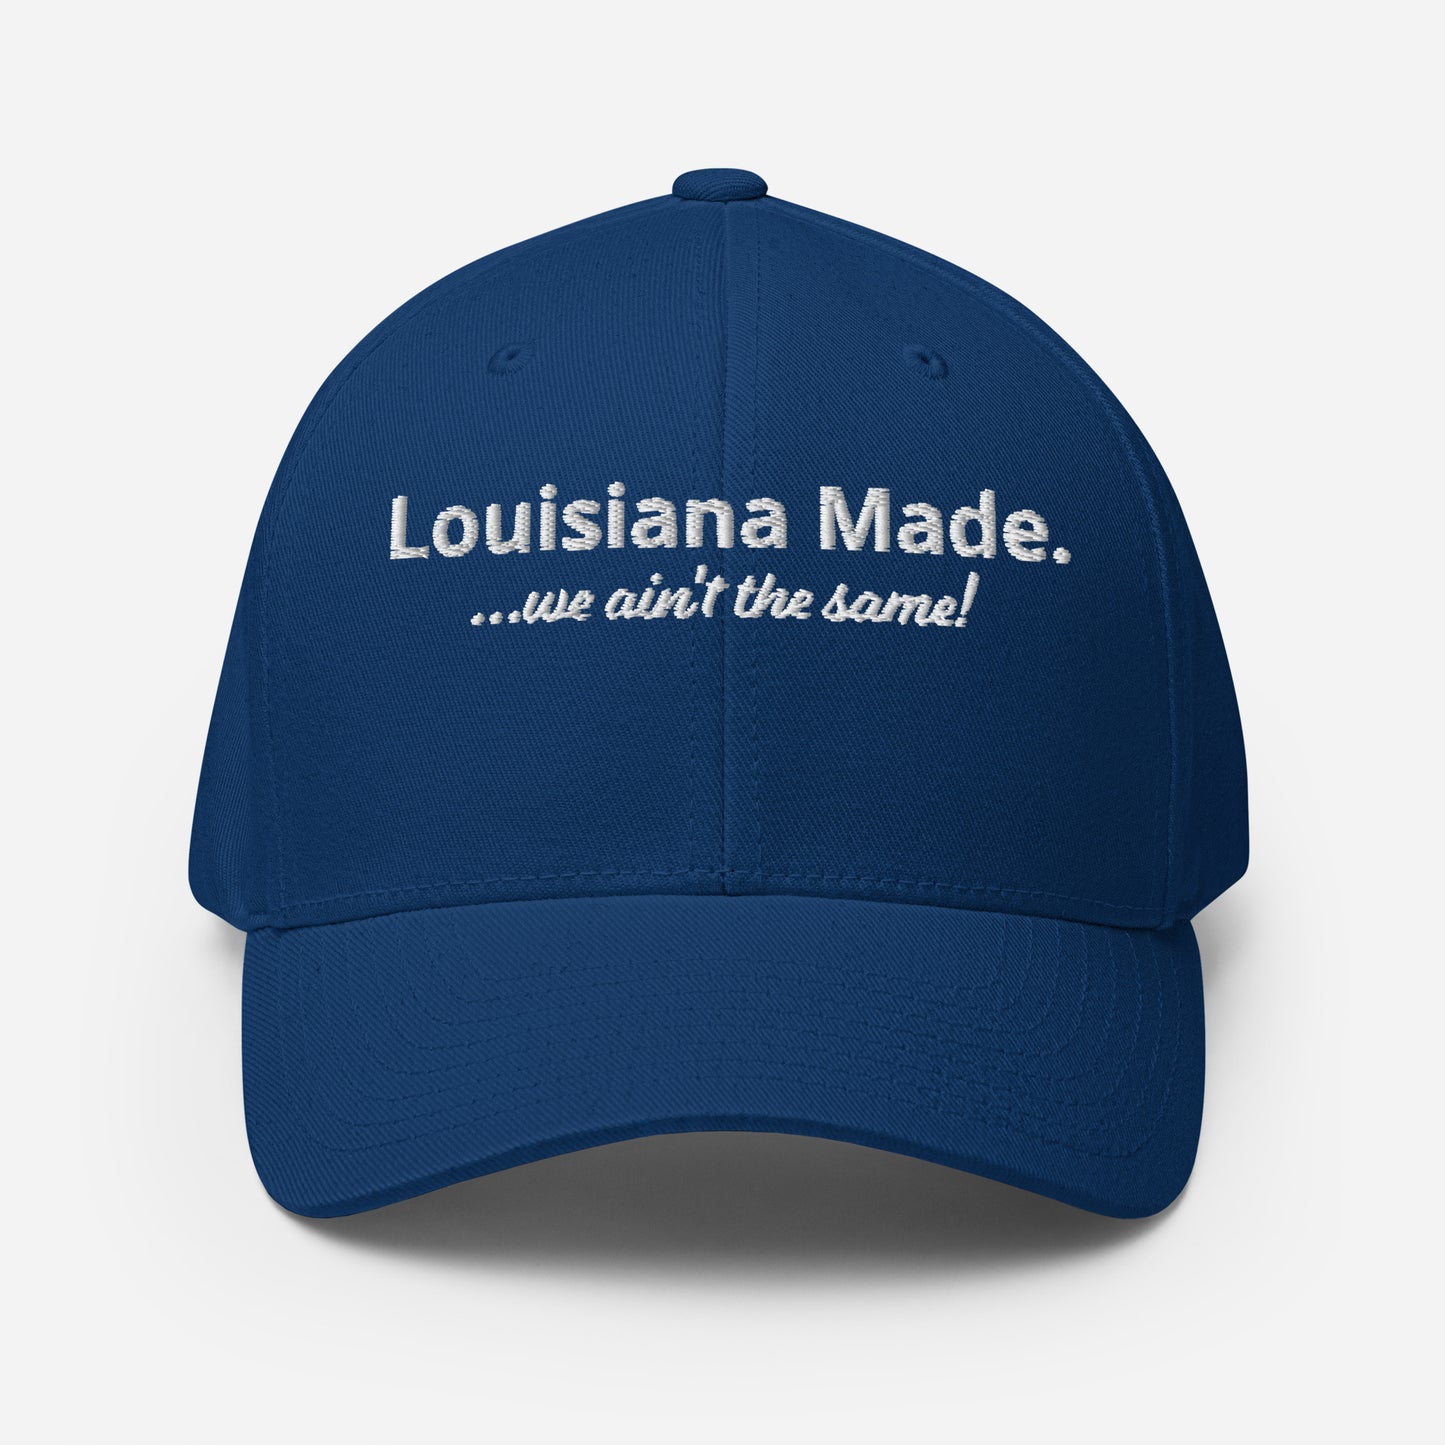 Louisiana Made. ...we ain't the same! Hat